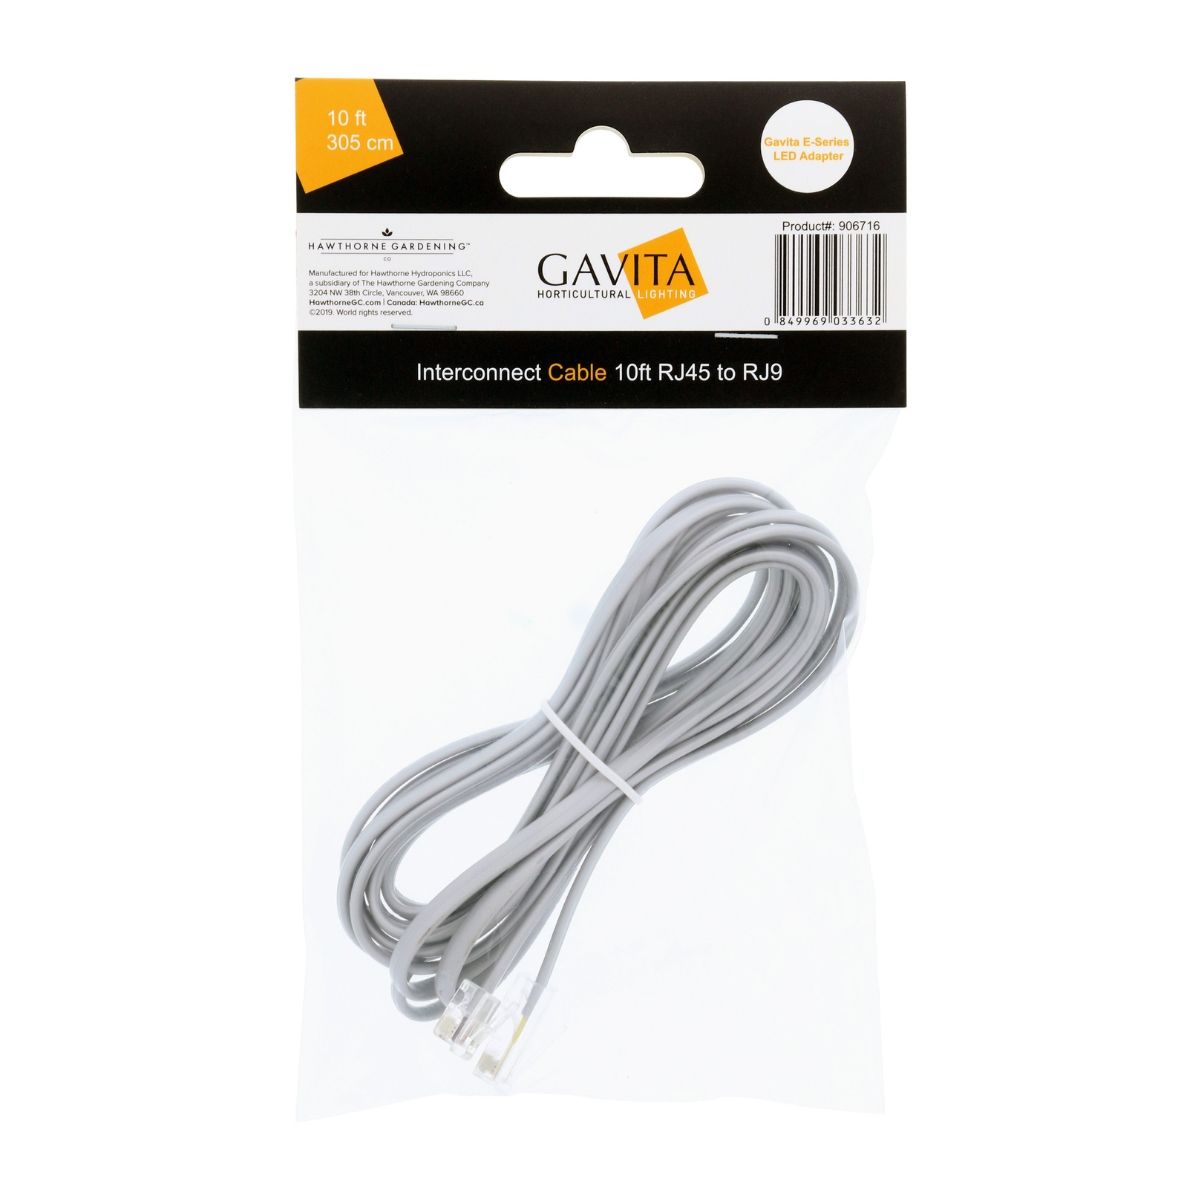 Adaptateurs et câbles LED Gavita E-Series